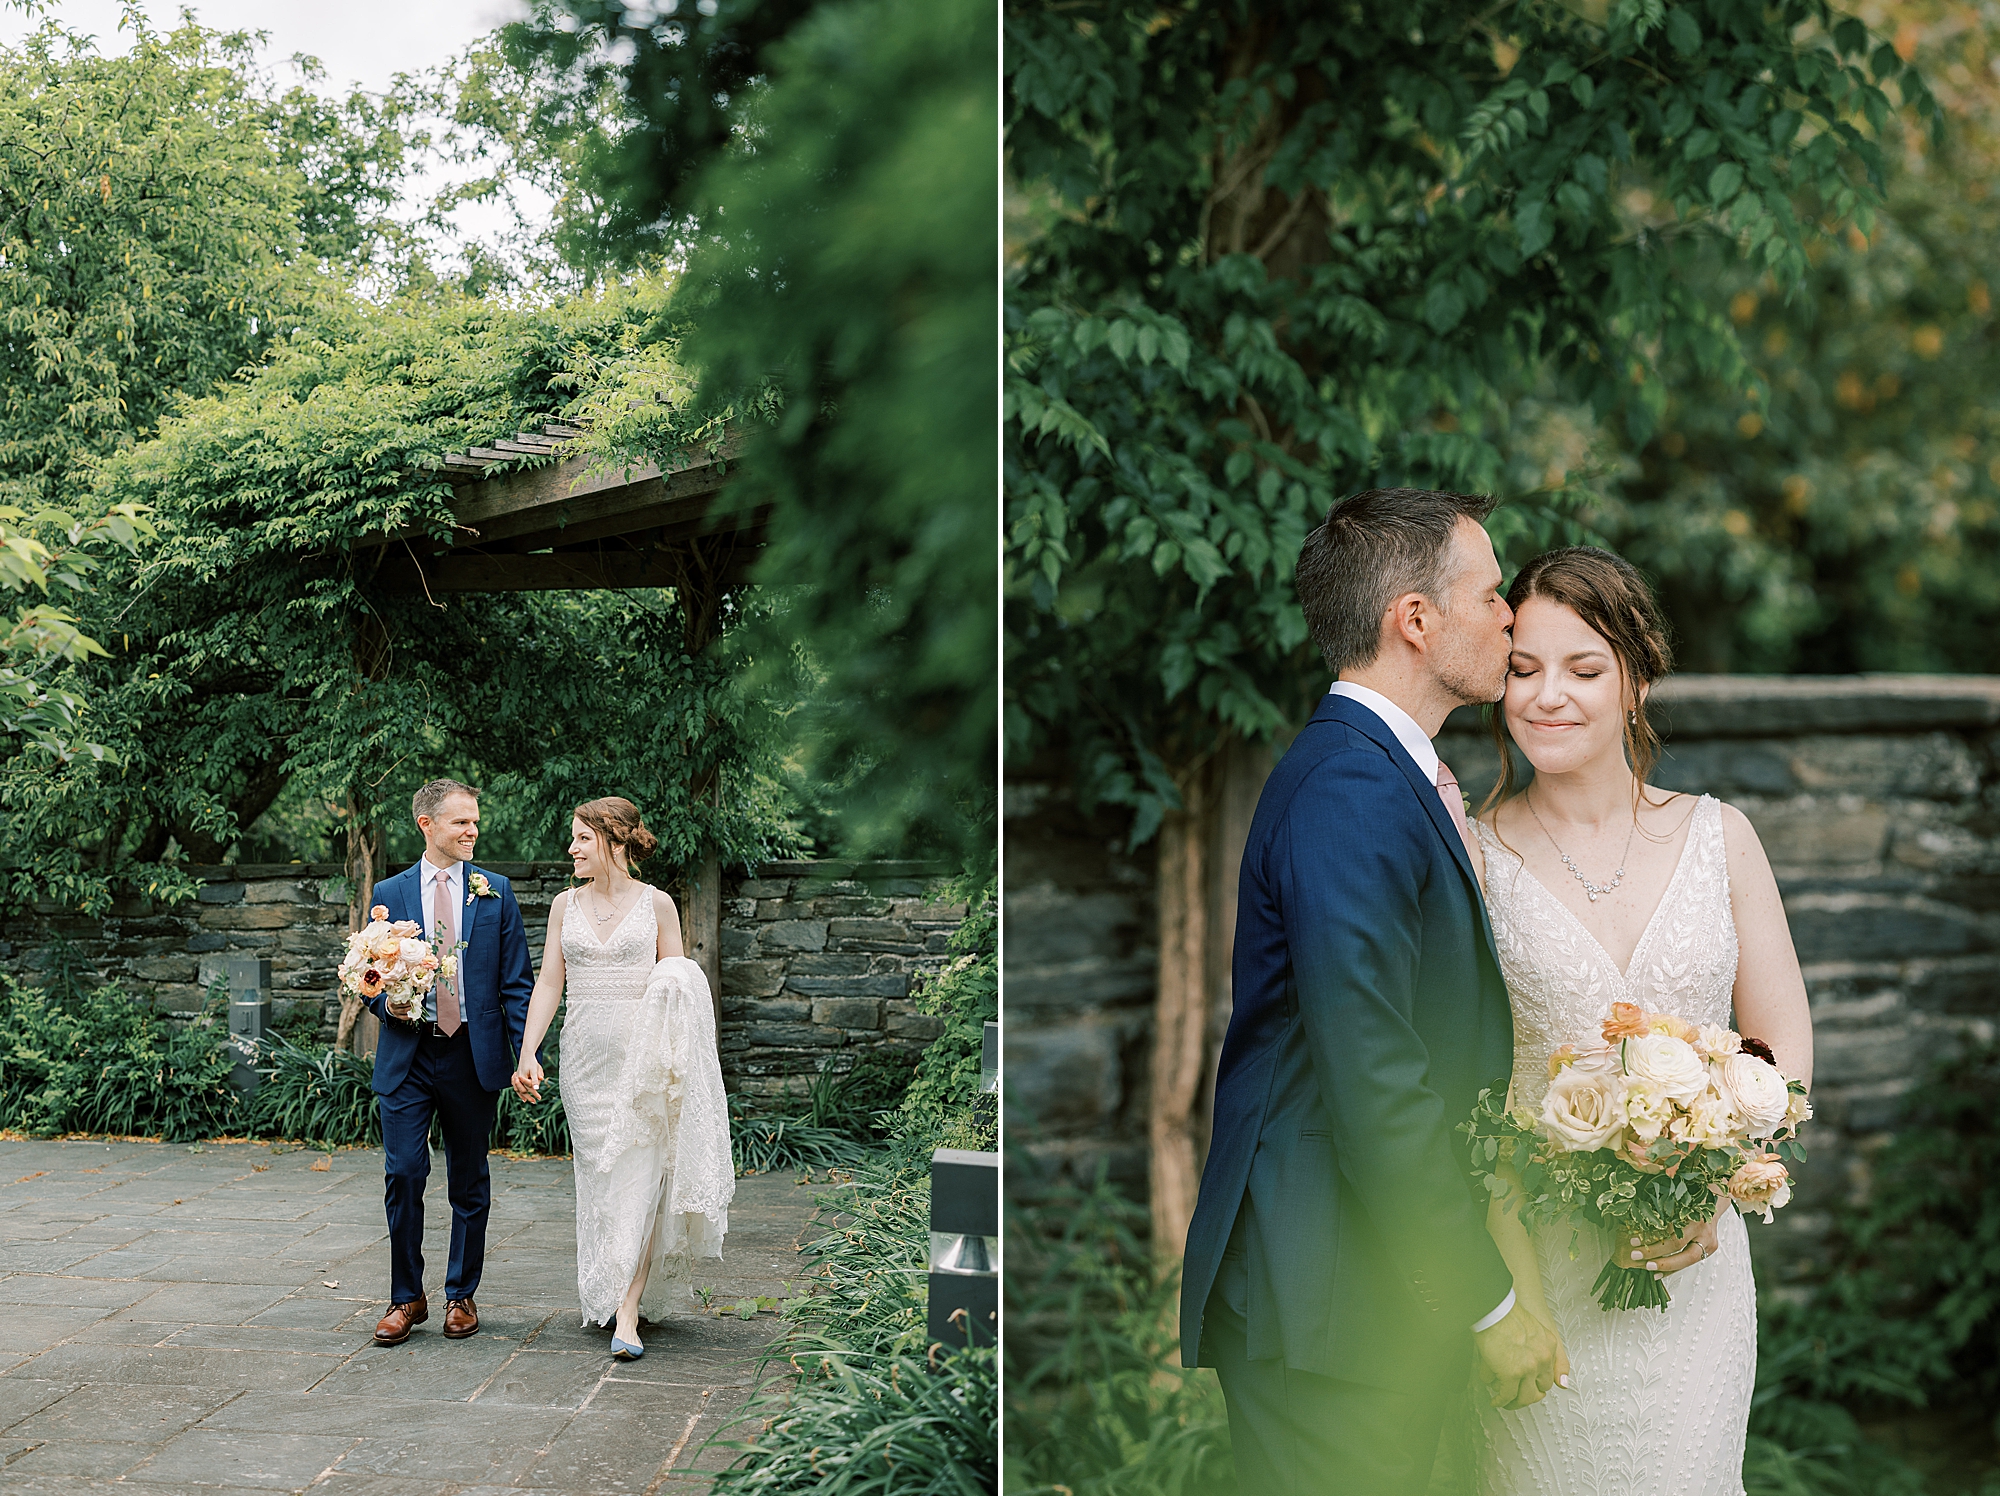 newlyweds walk through gardens with stone walls at Bellevue Hall